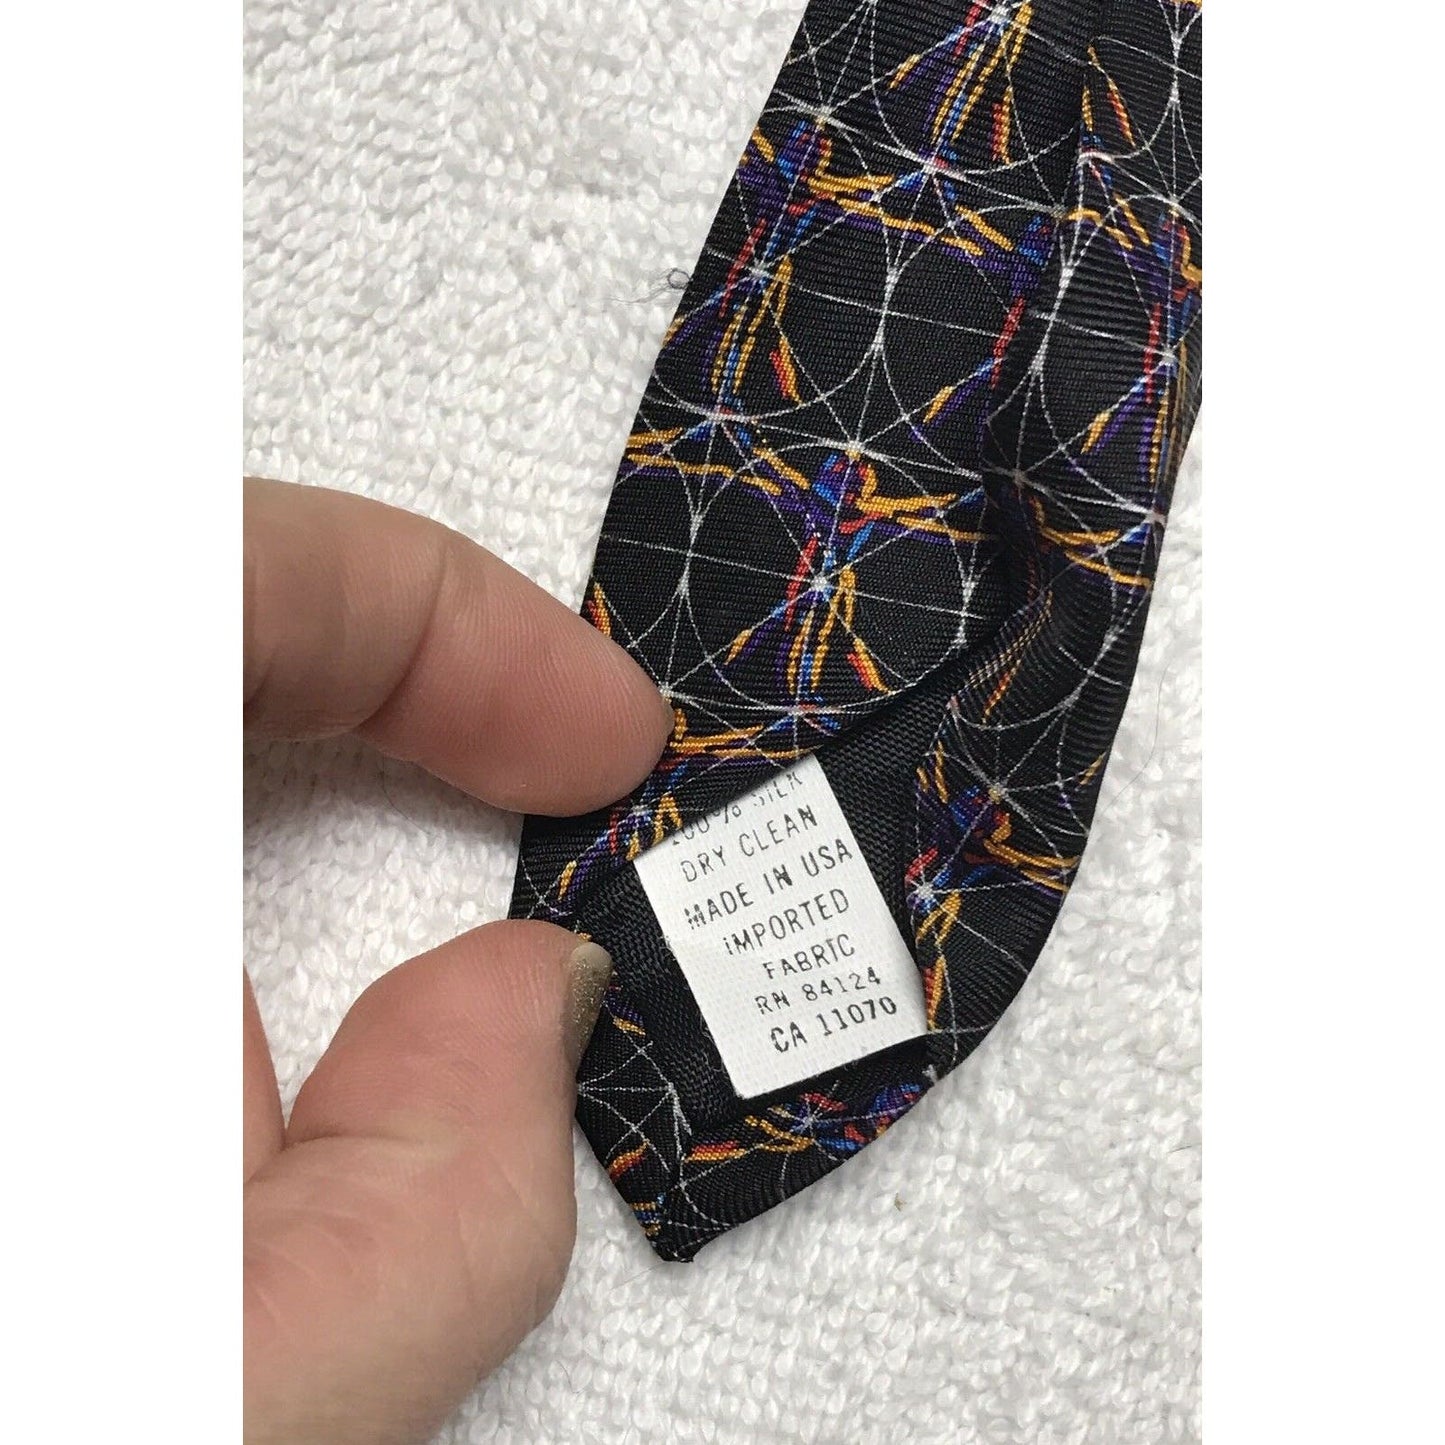 RM Style Ralph Marlin Da Vinci Repeat Novelty Necktie Tie 100% Silk